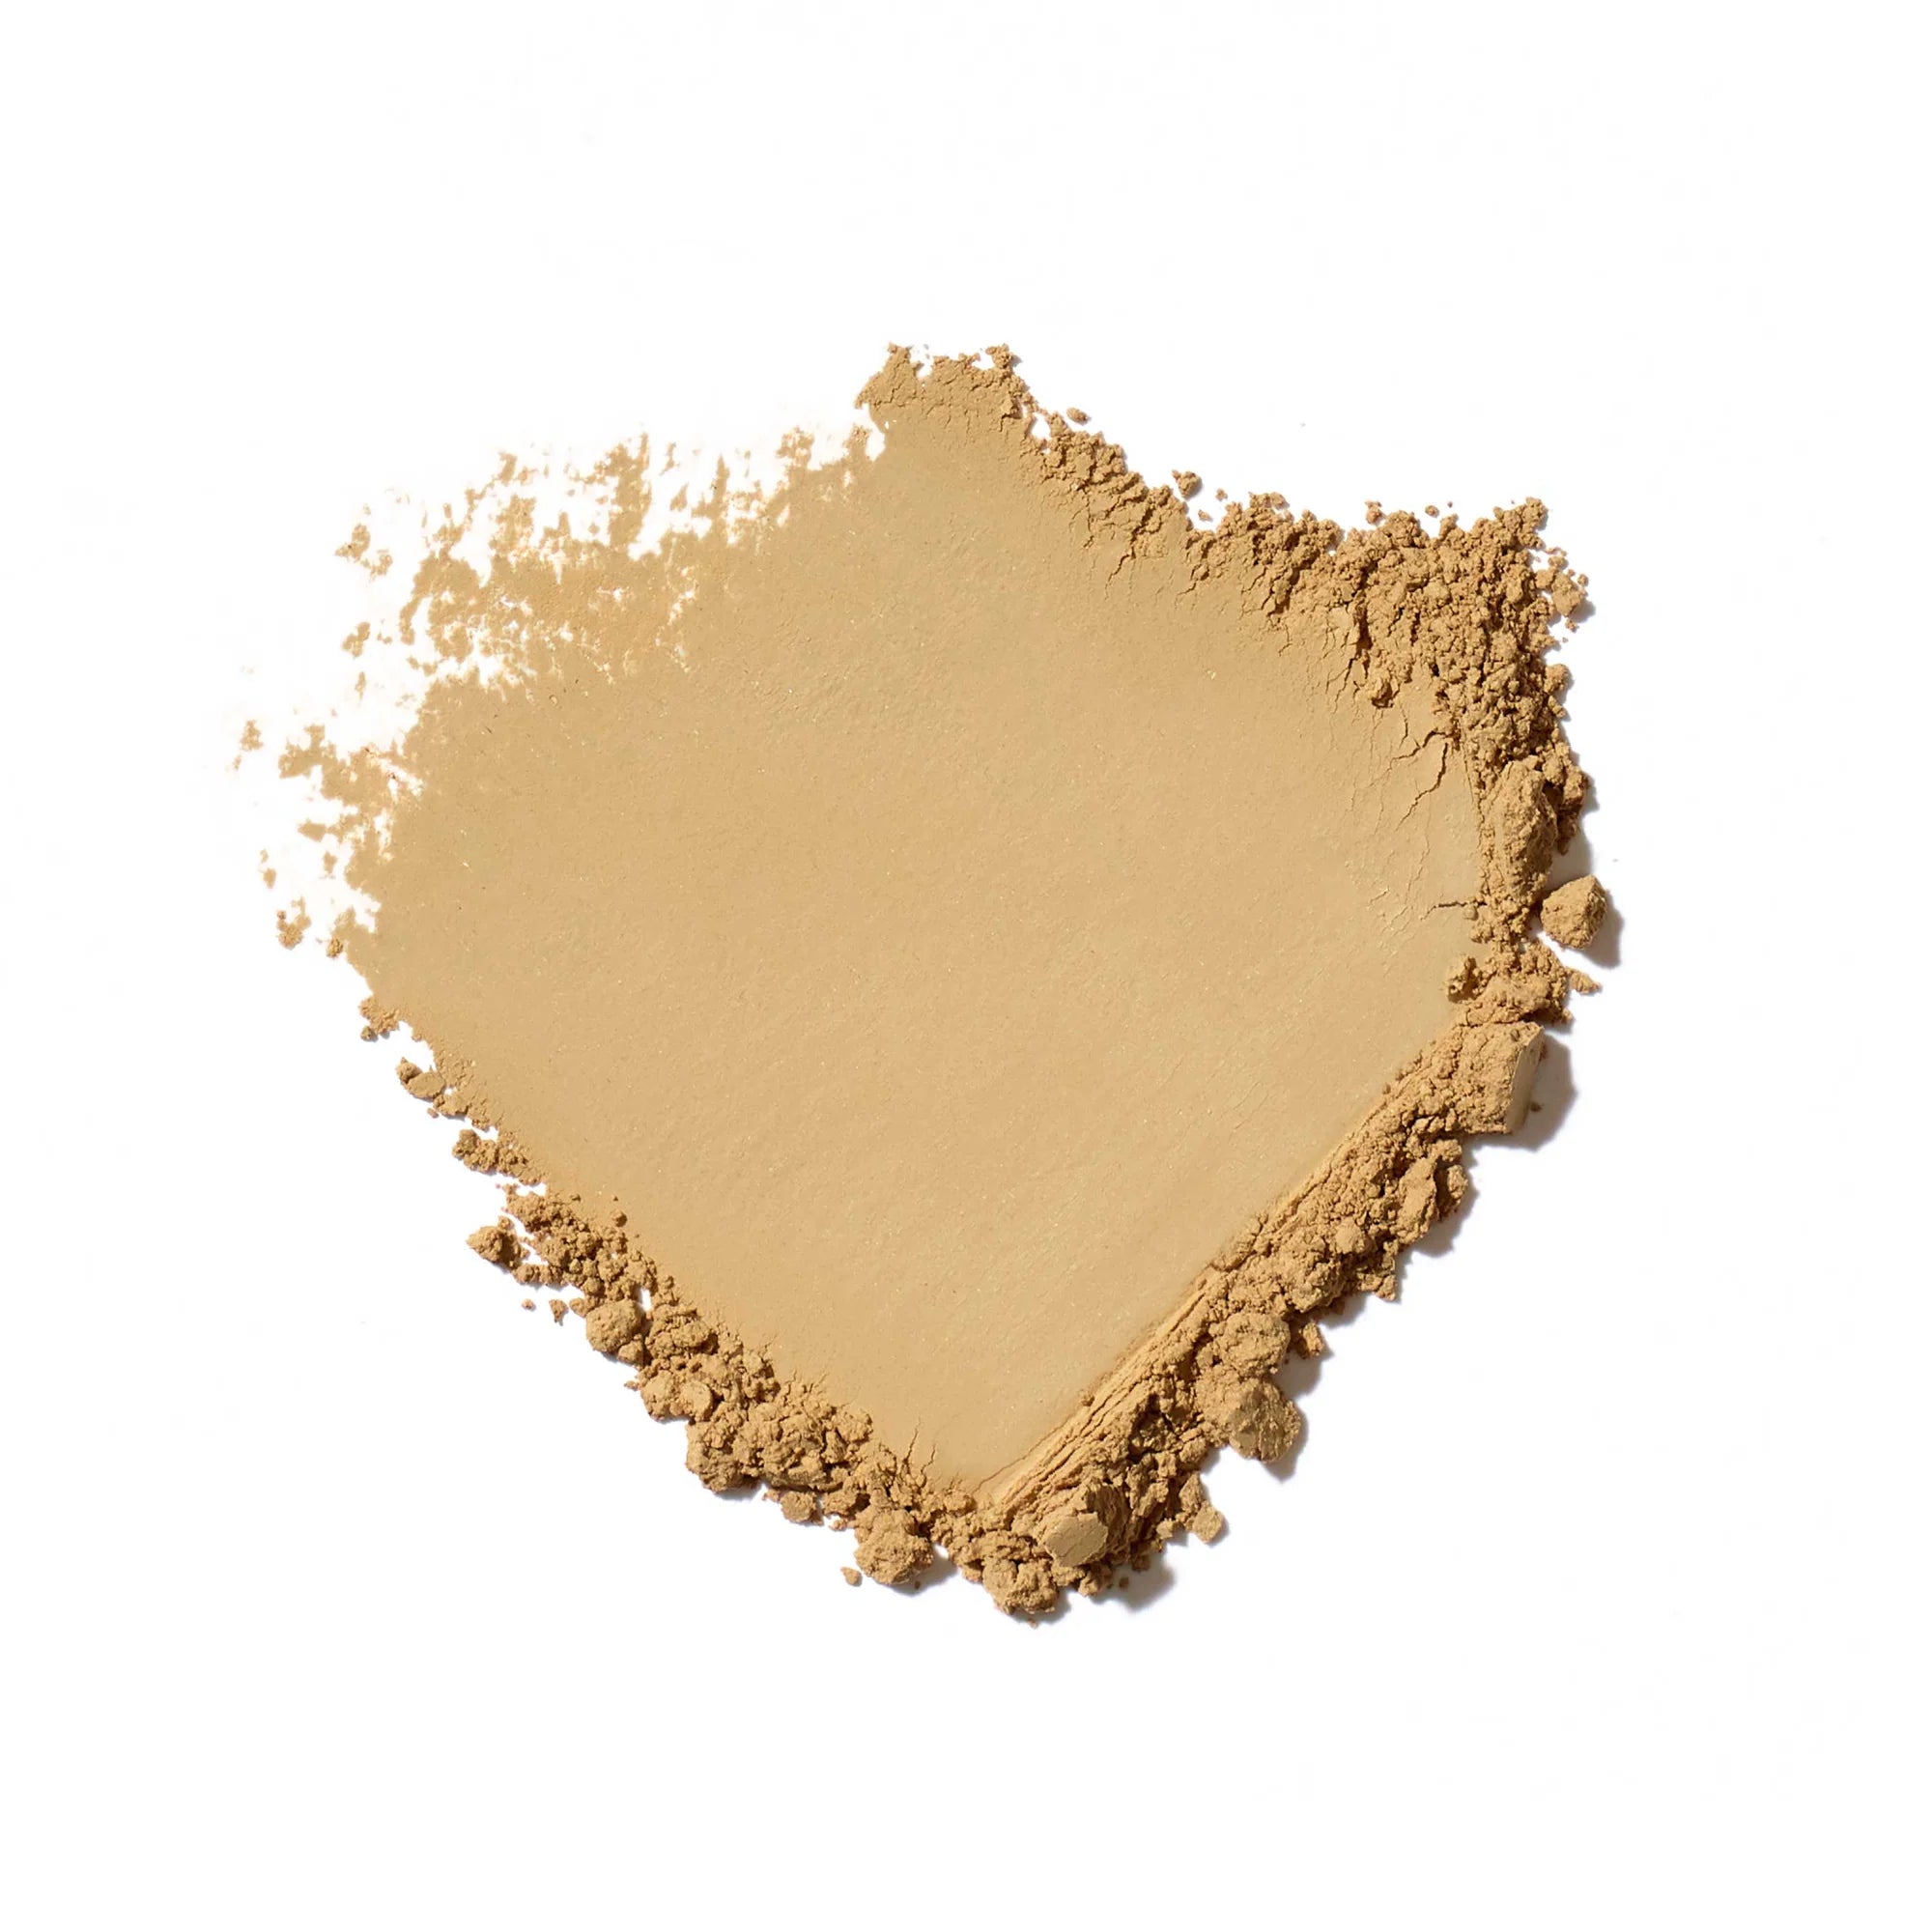 Jane Iredale's Amazing Base® Loose Mineral Powder SPF 20 - shade Latte - Medium/Dark with gold brown undertones